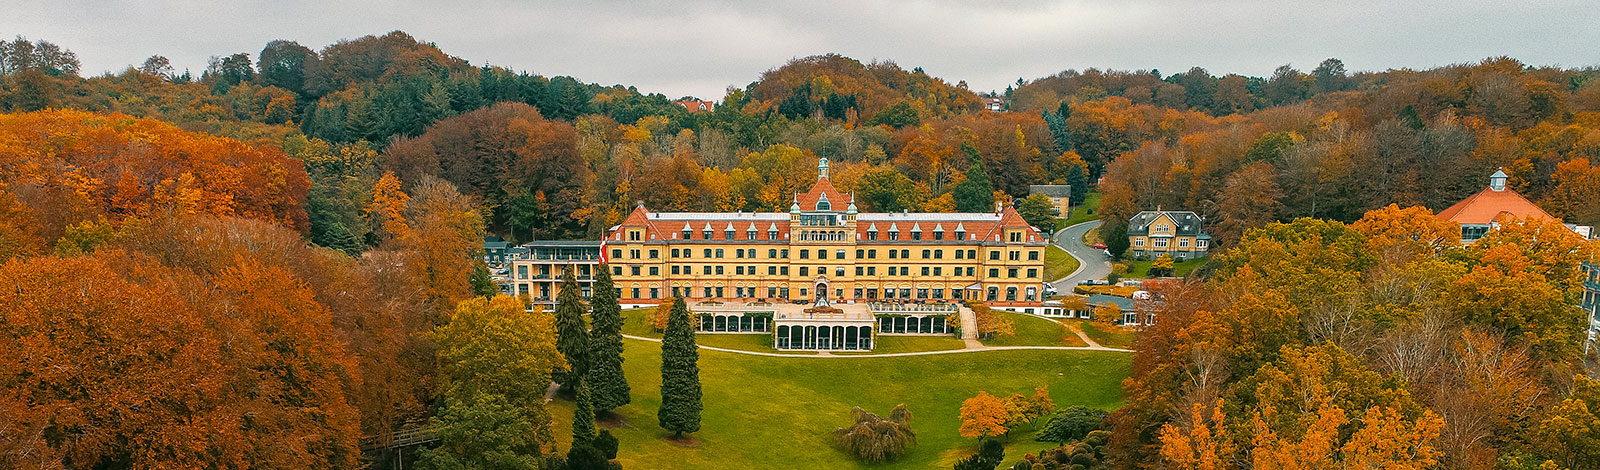 The Castle in the Woods - lovely Hotel Vejlefjord